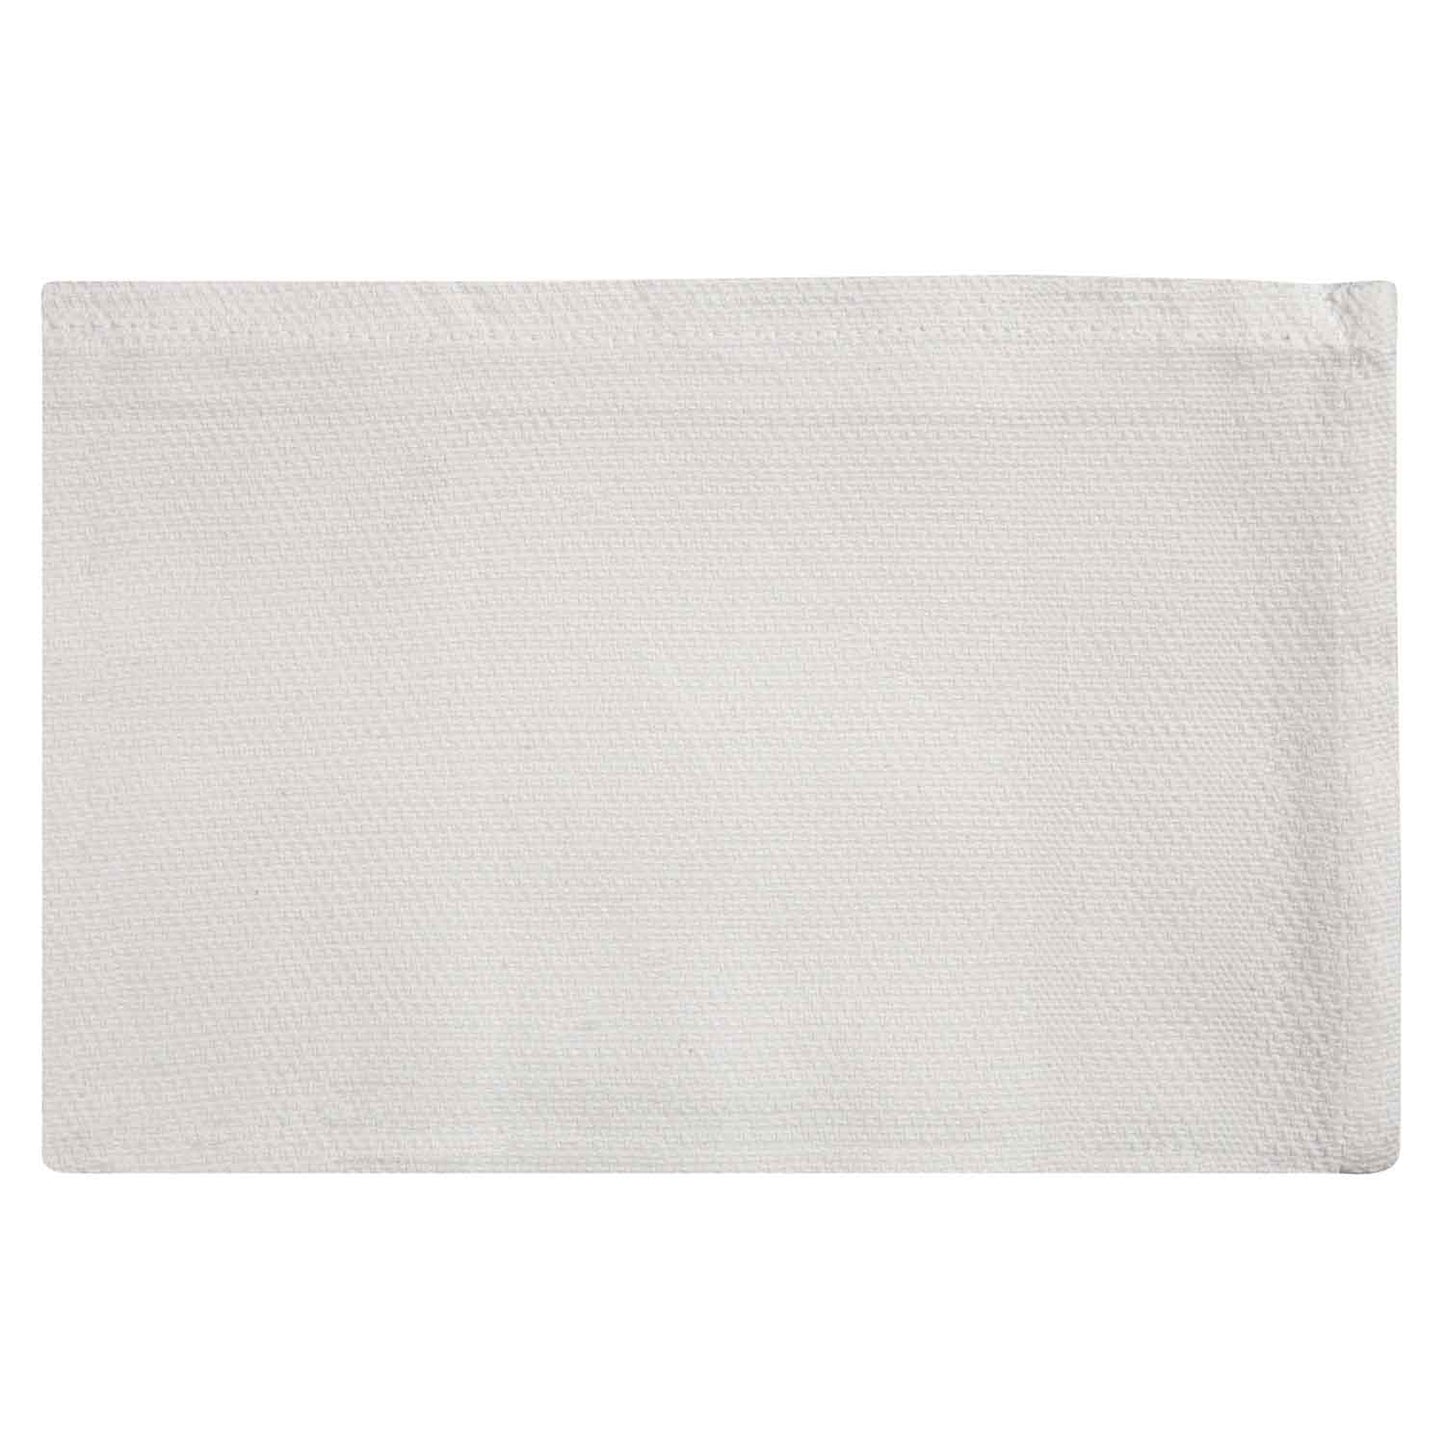 Medical Hand Towel, 18x33 inch, White, 600 pcs/pk